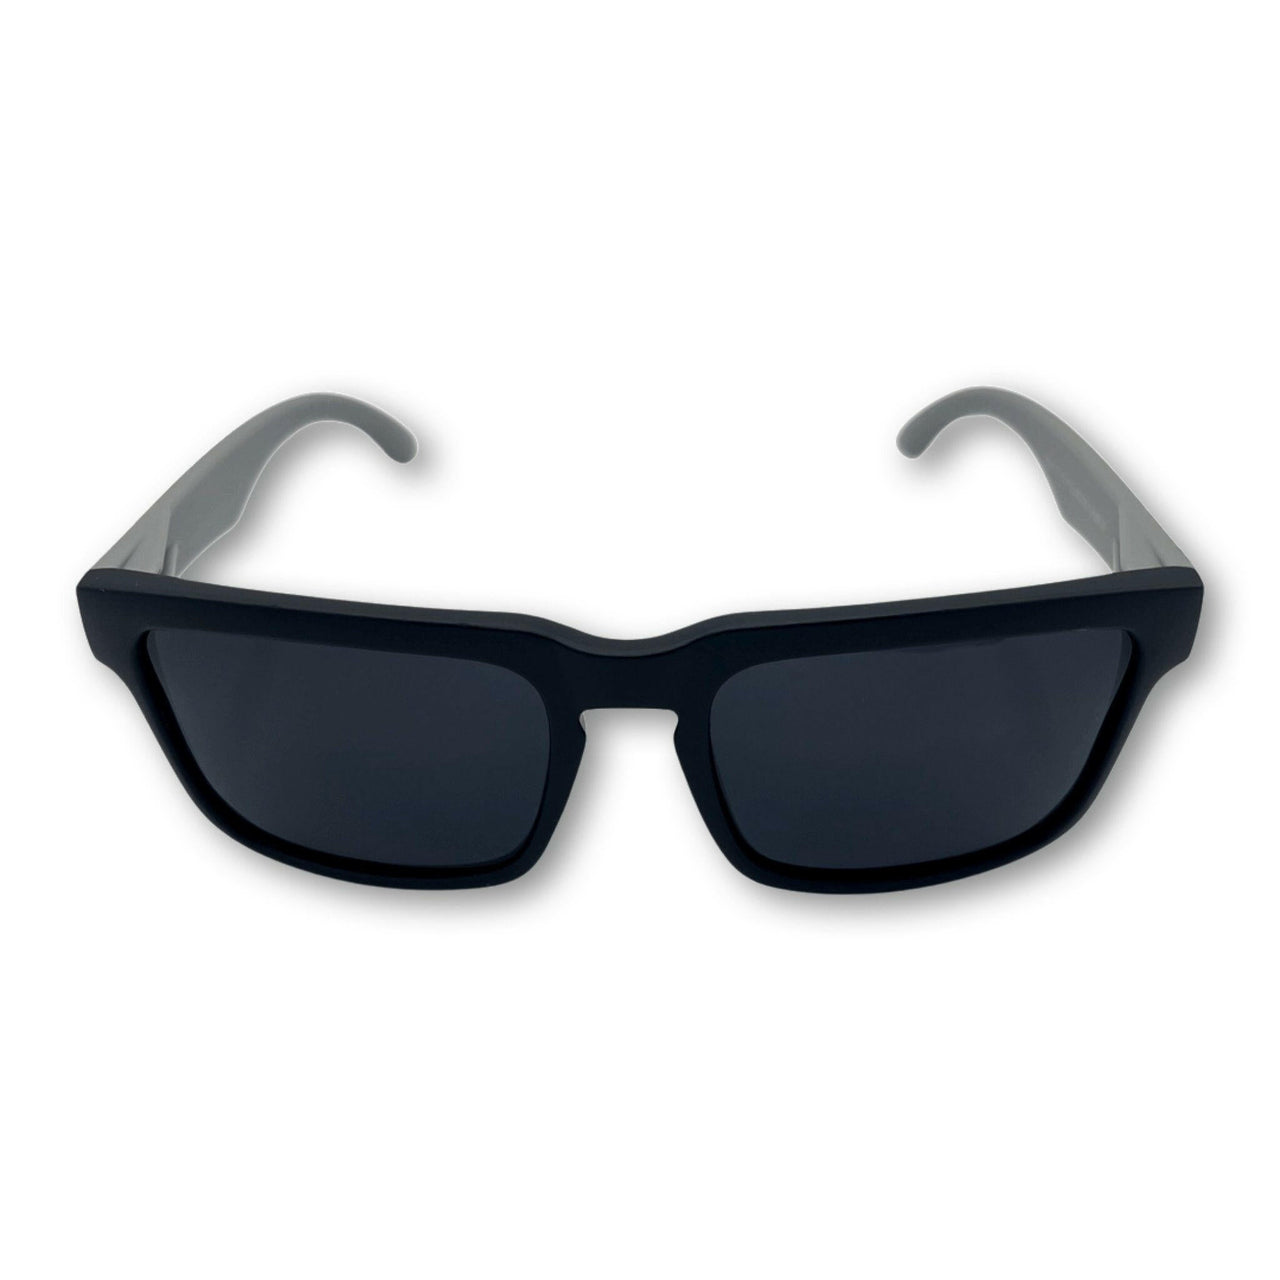 Hustler Grey & Black Sunglasses - Rebel Reaper Clothing CompanySunglasses